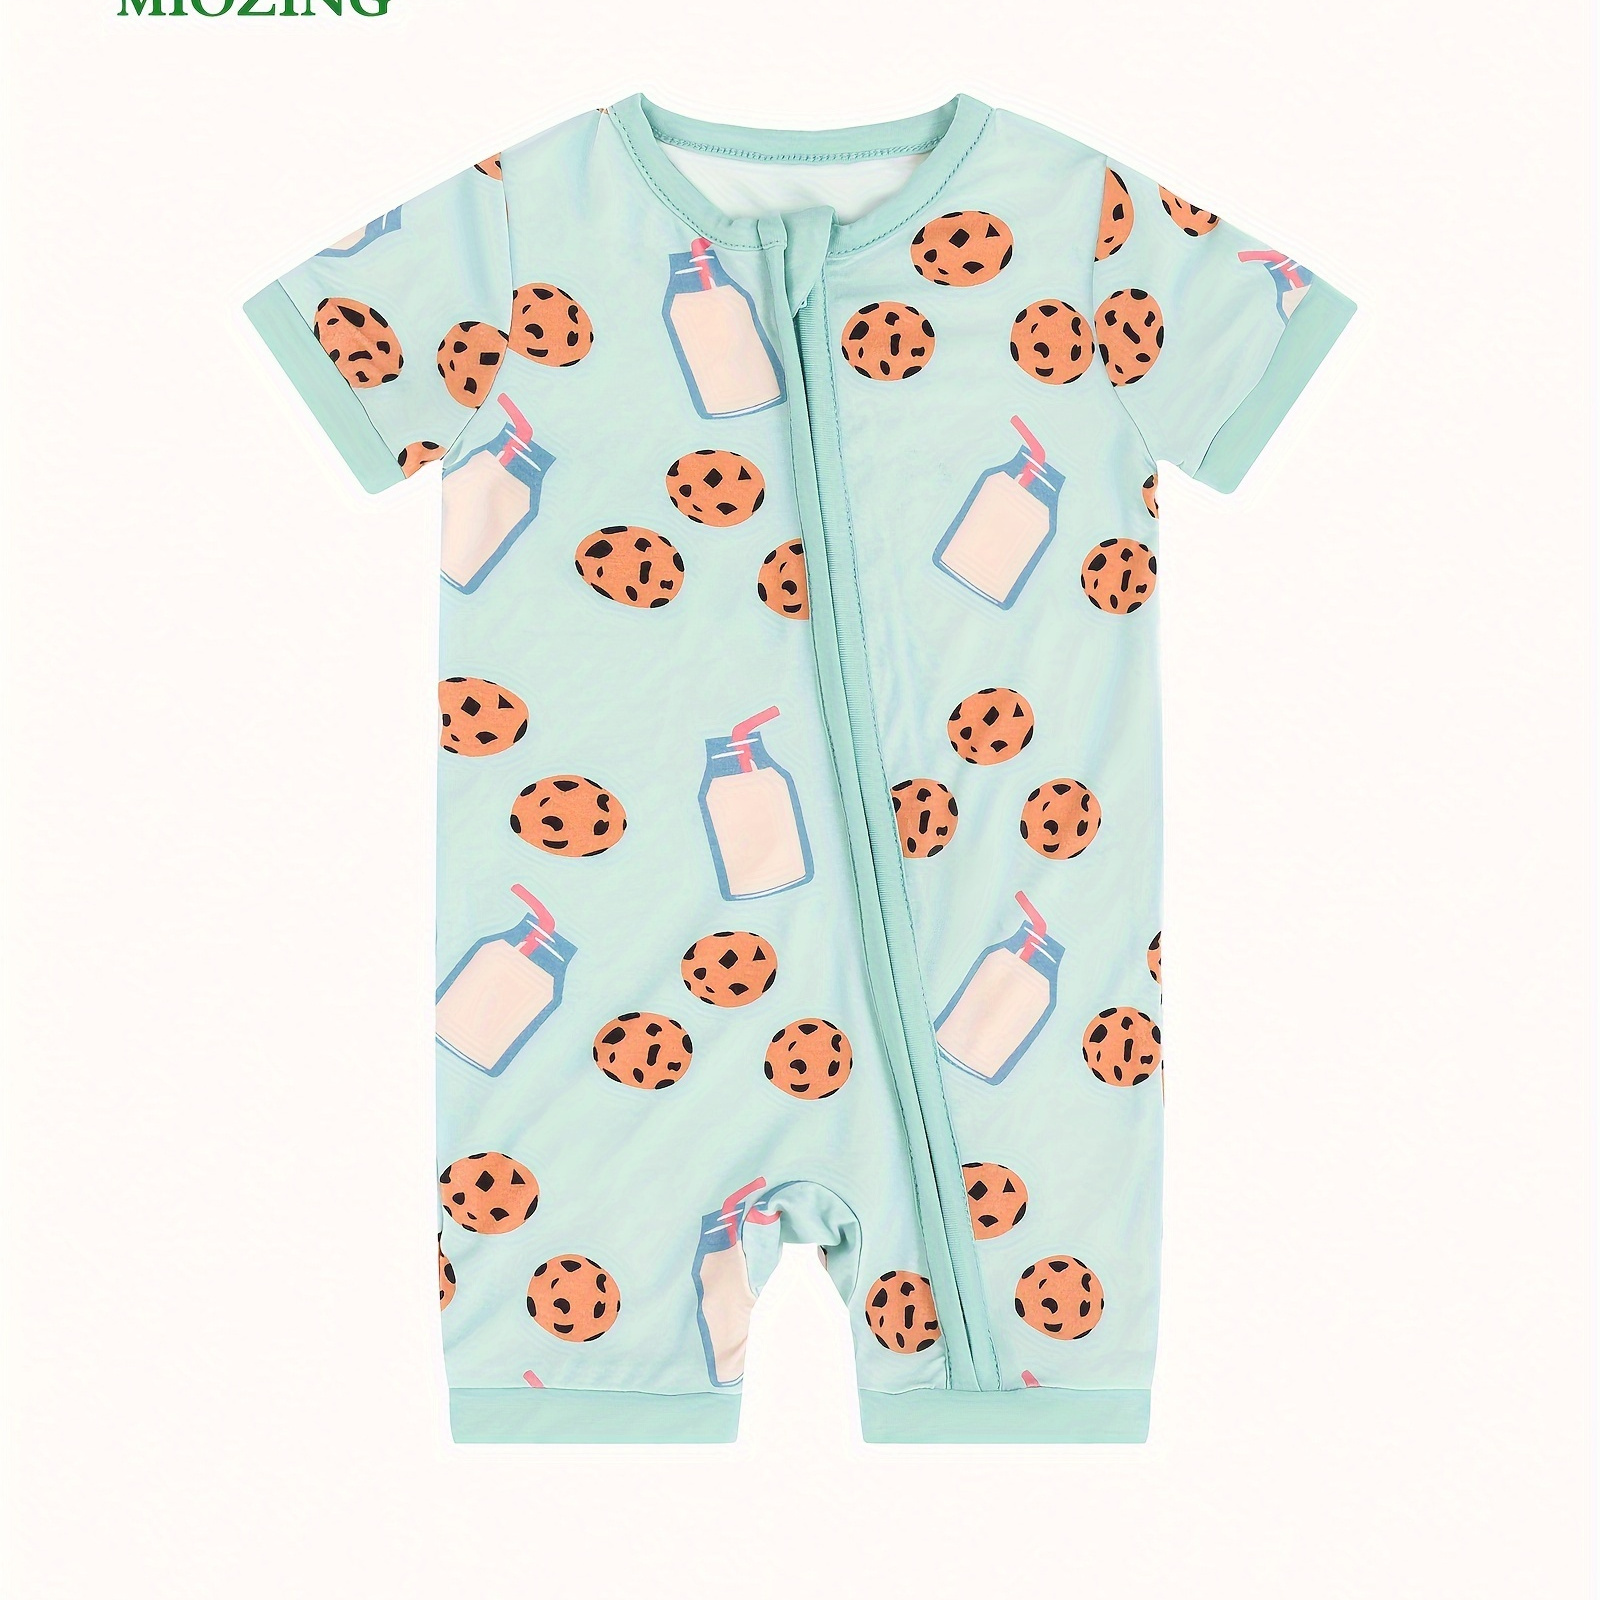 

Miozing Bamboo Fiber Bodysuit For Baby, Milk Bottle And Biscuit Pattern Short Sleeve Onesie, Infant & Toddler Girl's Romper